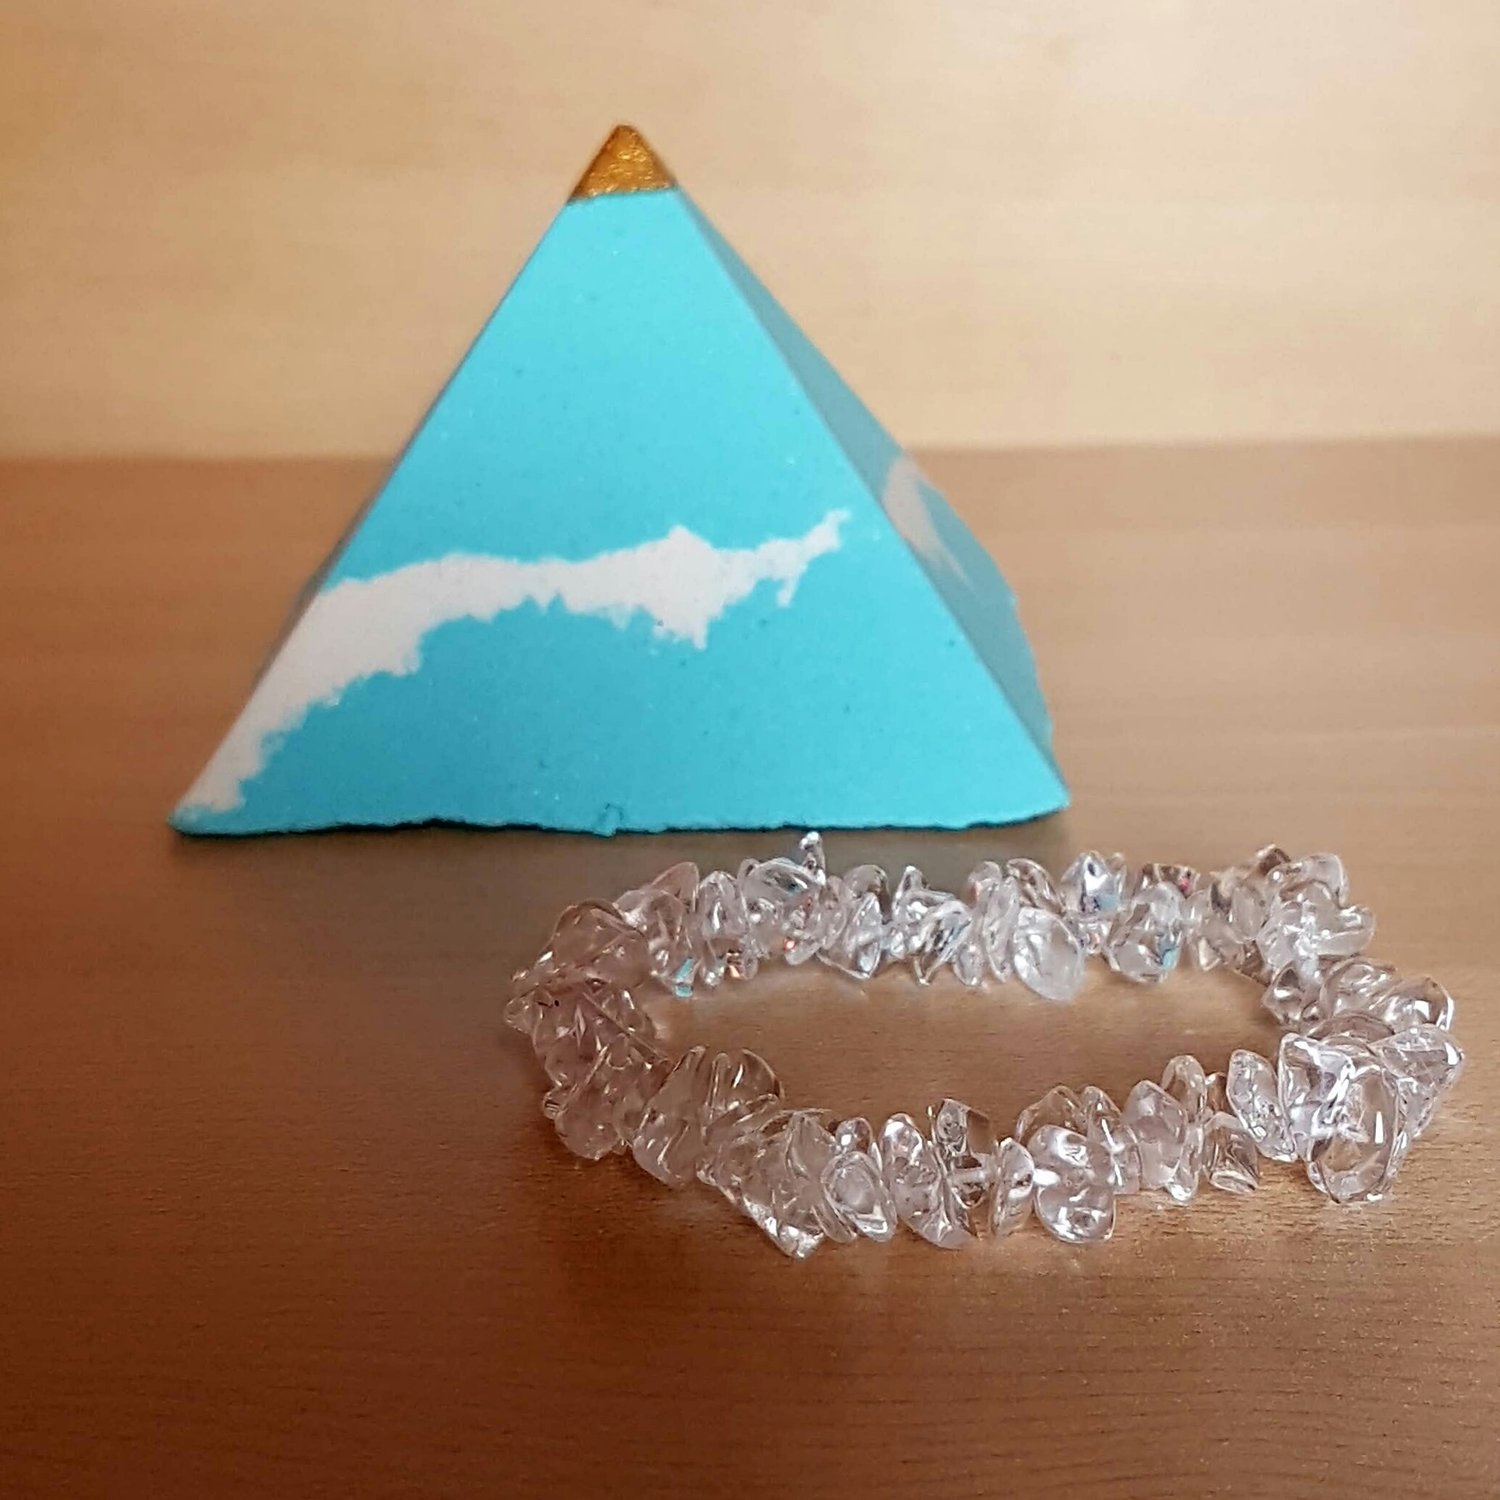 Pyramid Bath Bomb with Crystal Bracelet